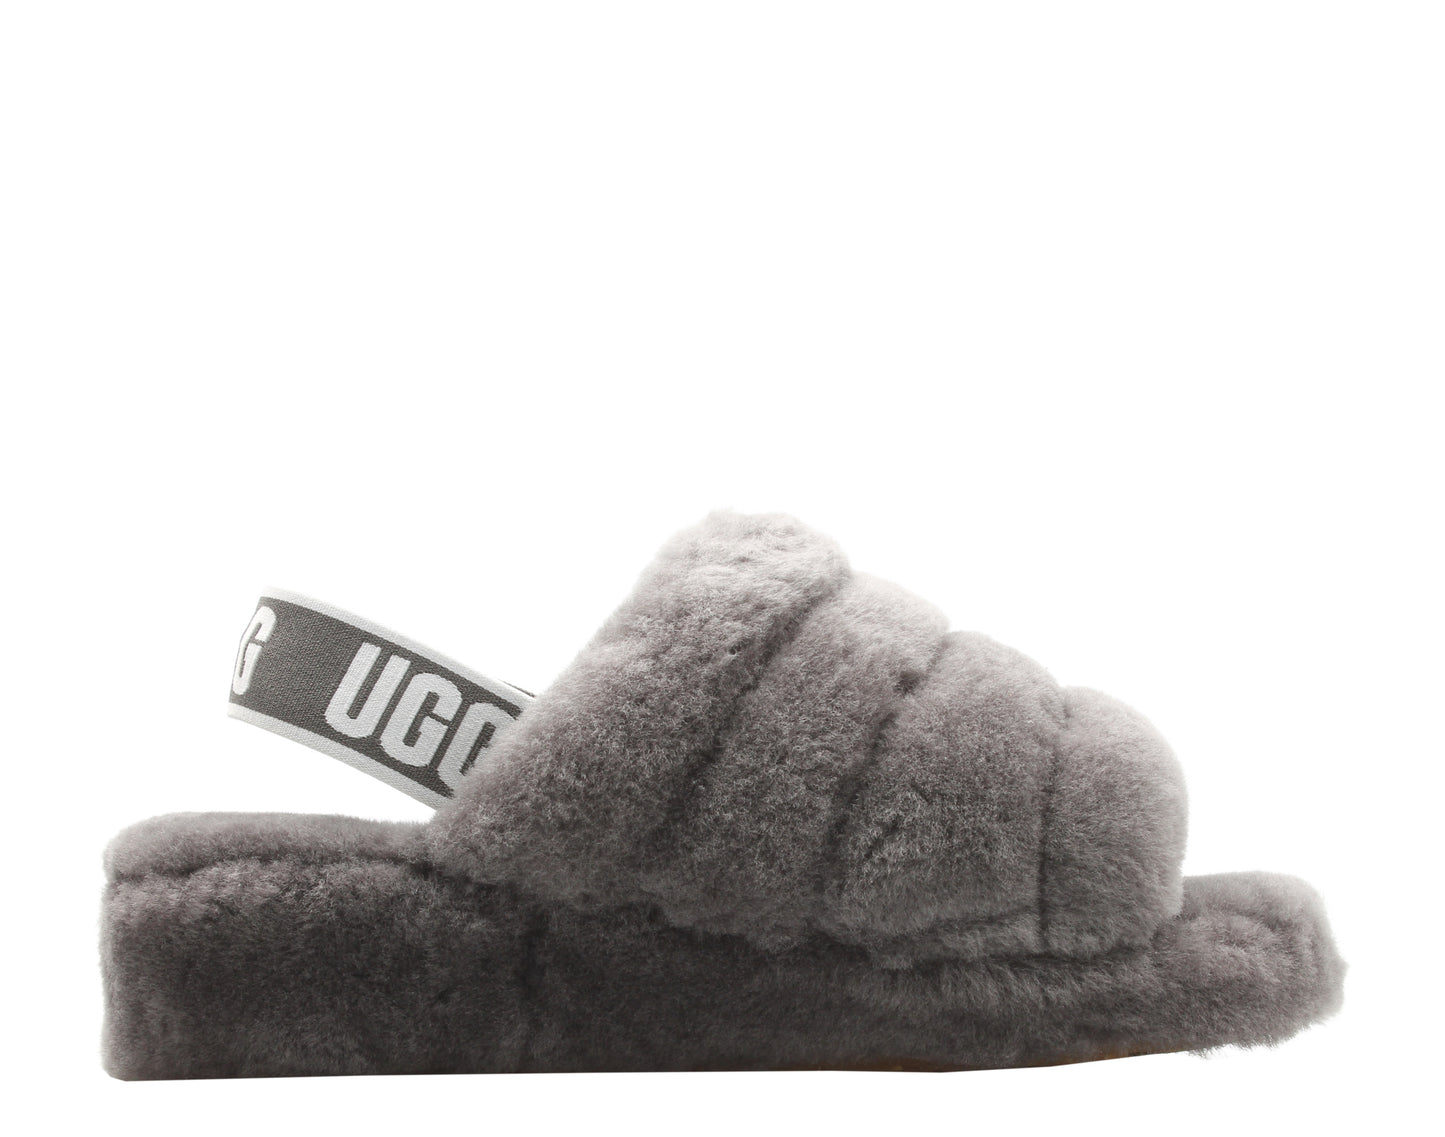 UGG Australia Fluff Yeah Slide Charcoal Grey Women's Sandals 1095119-CHRC